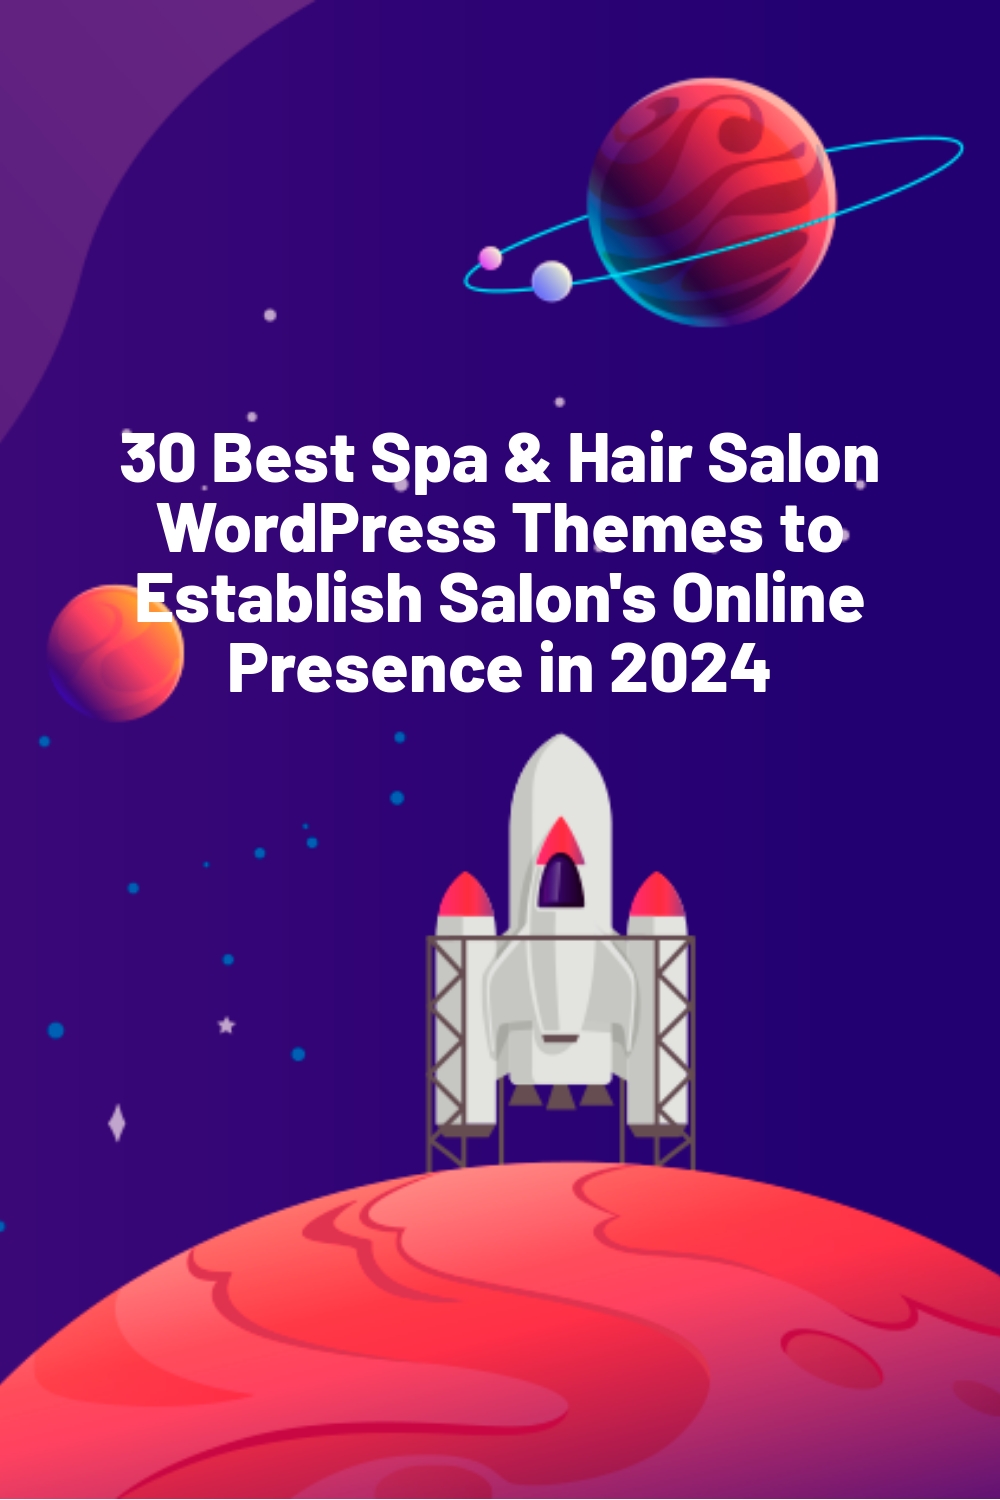 30 Best Spa & Hair Salon WordPress Themes to Establish Salon’s Online Presence in 2024